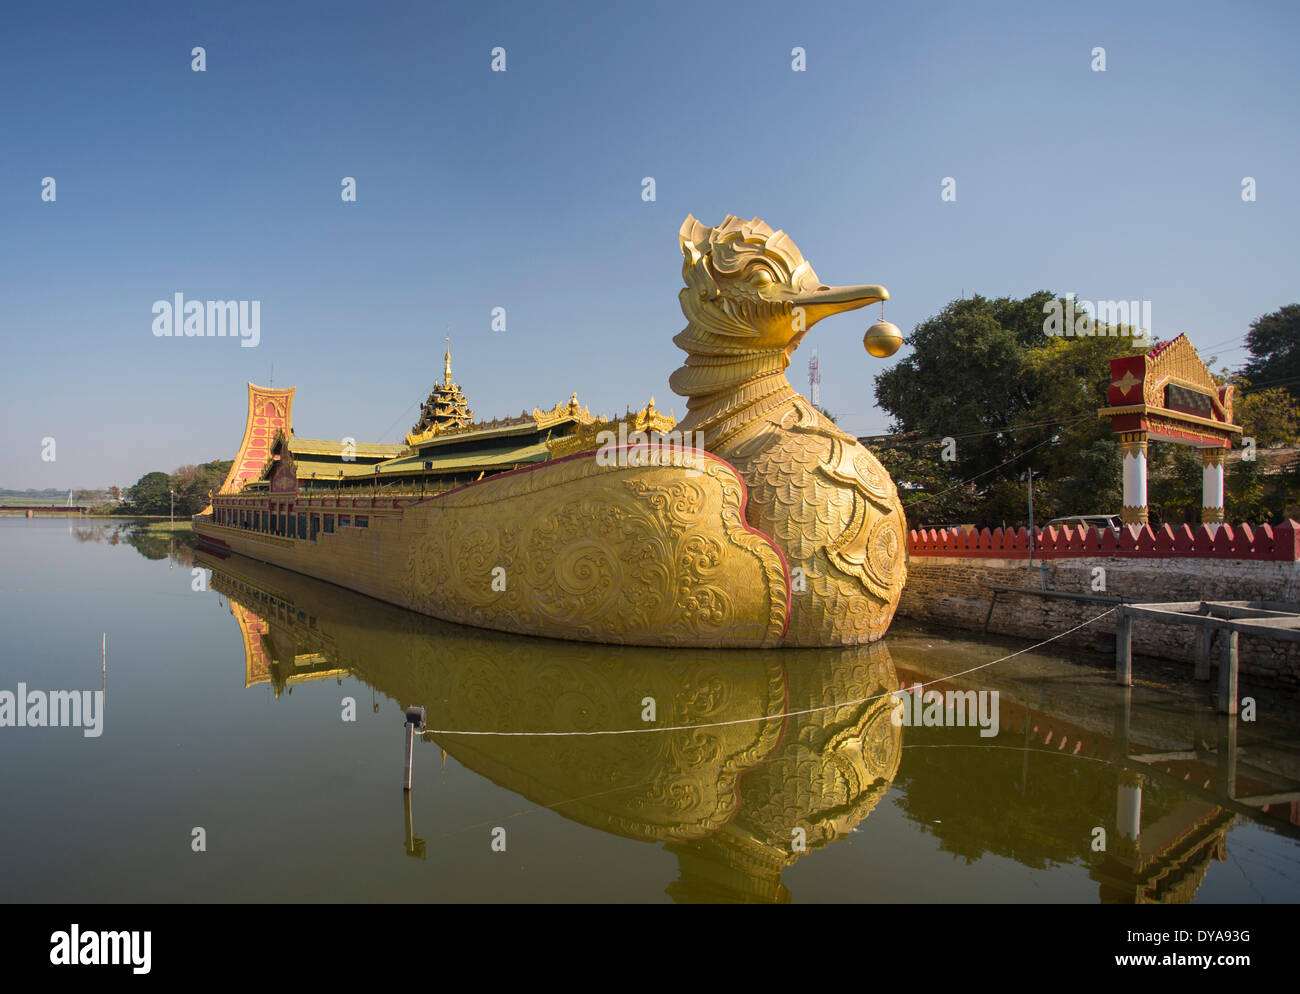 Myanmar Burma Asien Meitila Architektur Boot Stadt bunte berühmten goldenen See Landschaft Restaurant touristische traditionelle t Stockfoto